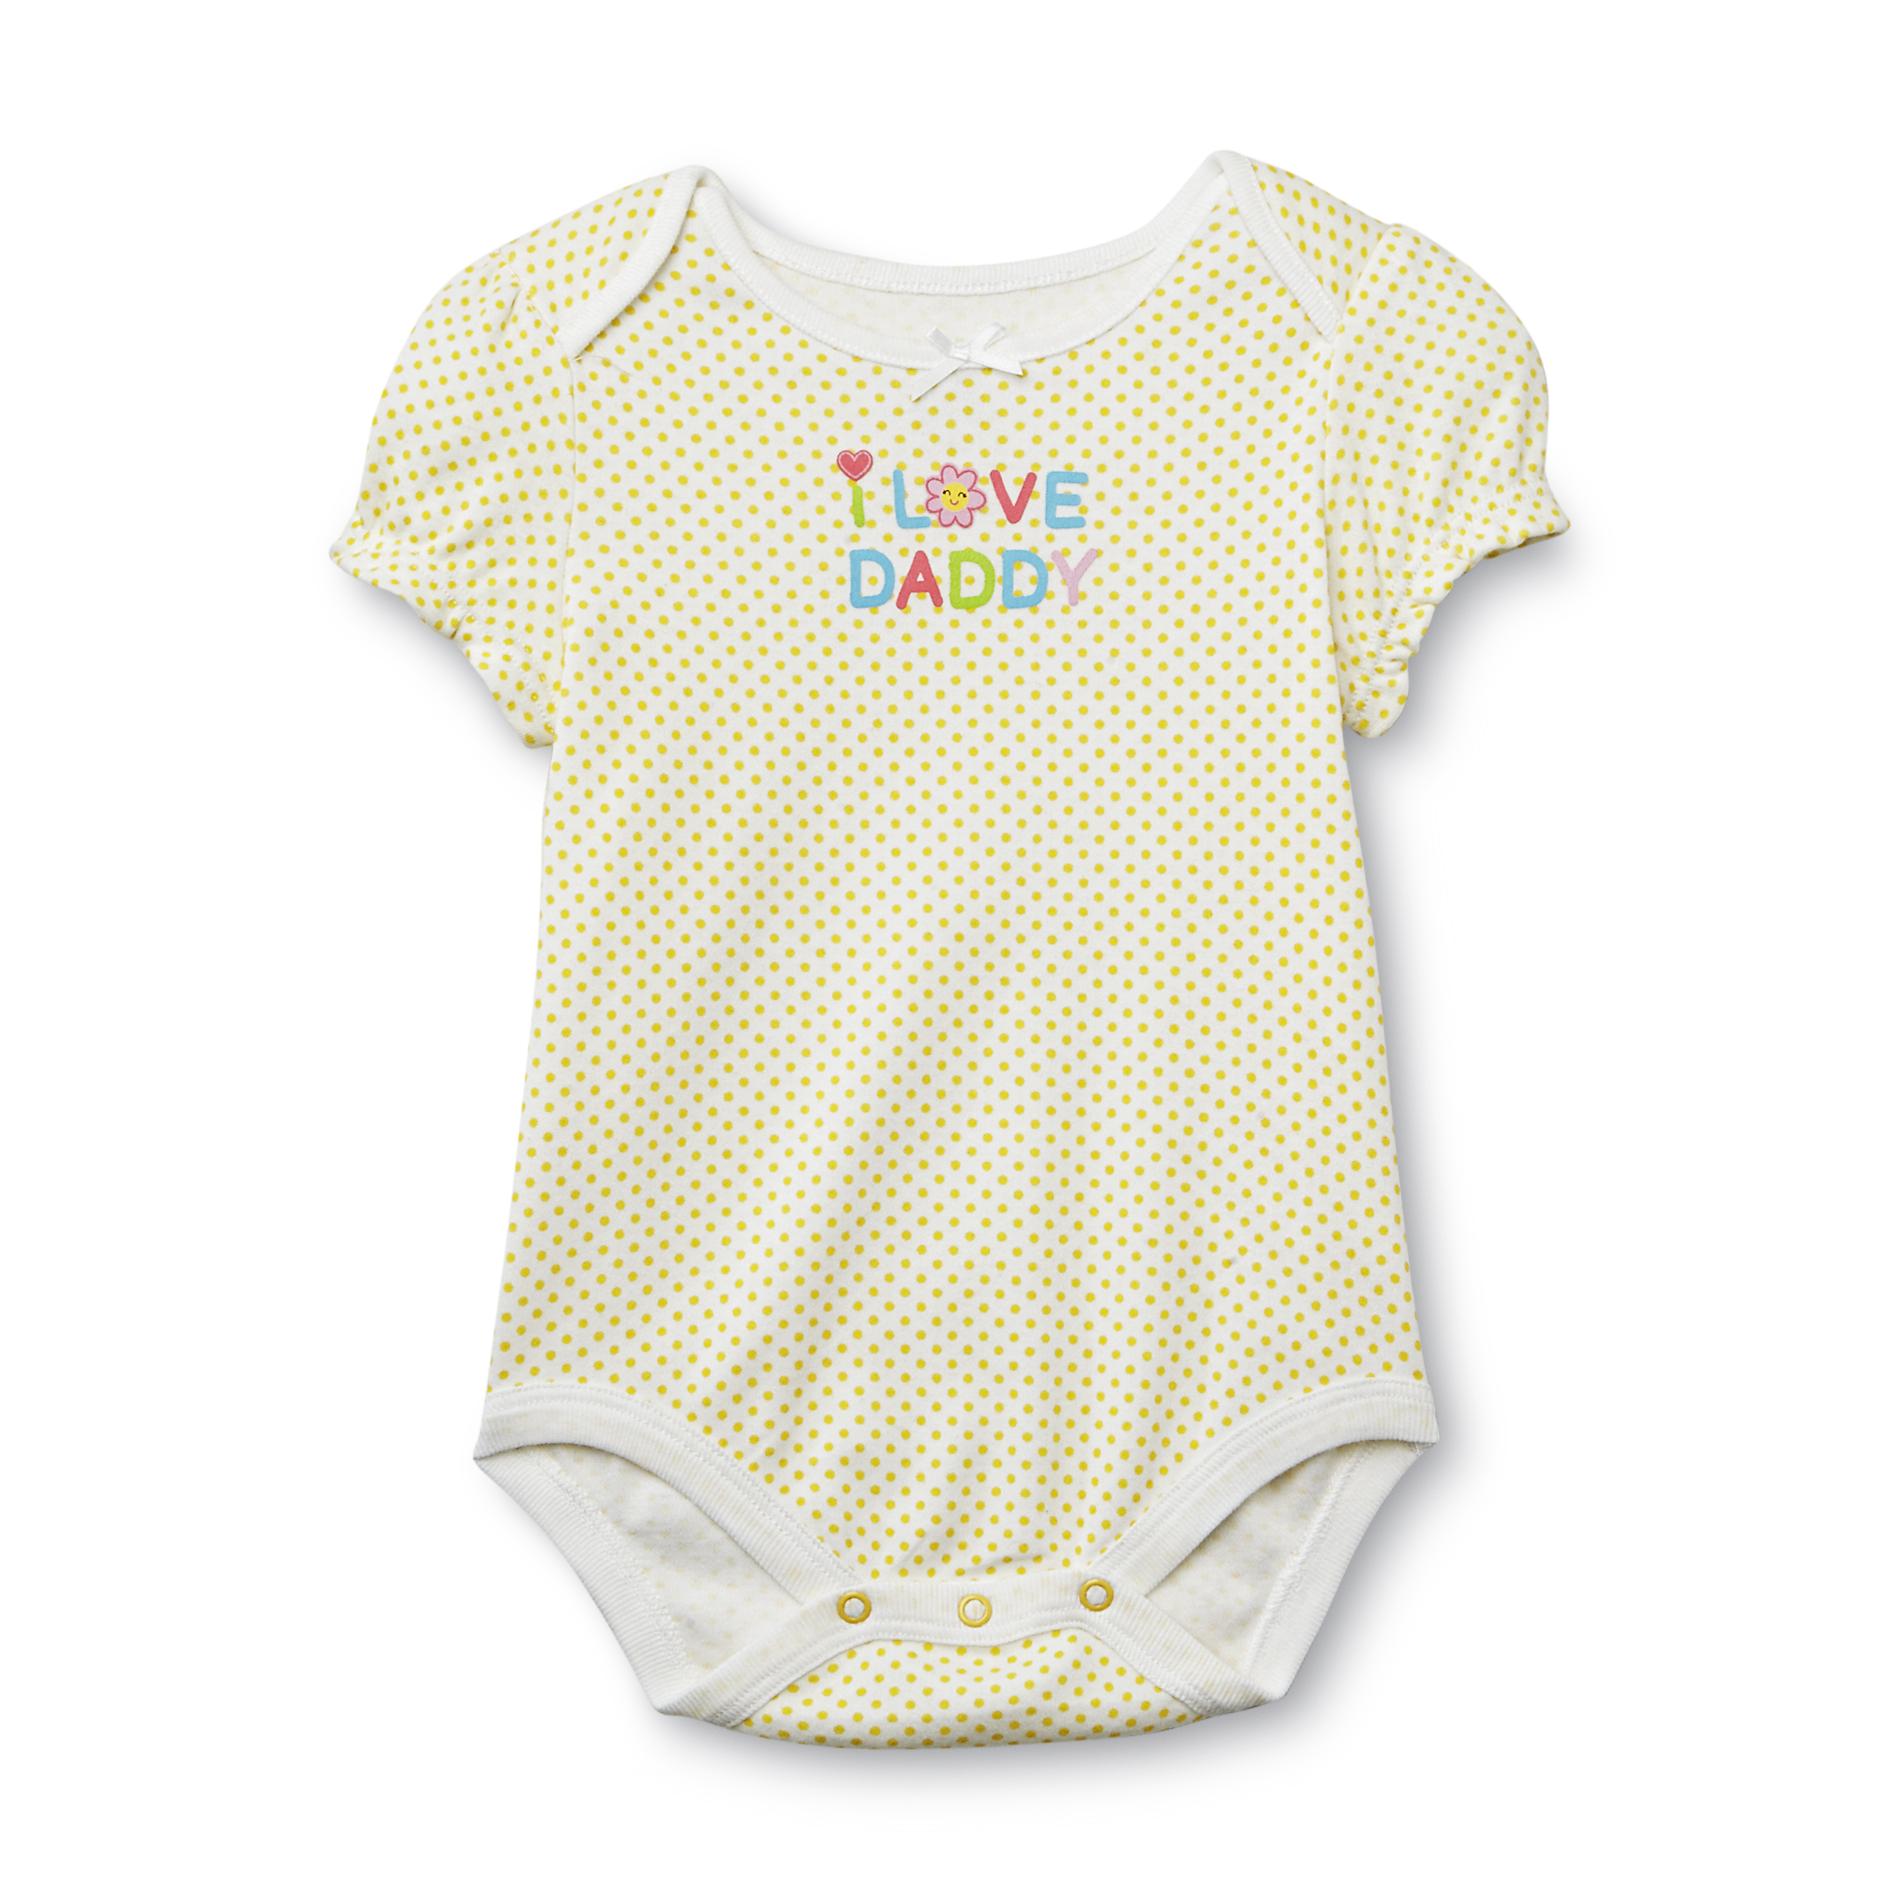 Small Wonders Newborn Girl's Short-Sleeve Bodysuit - Polka Dots